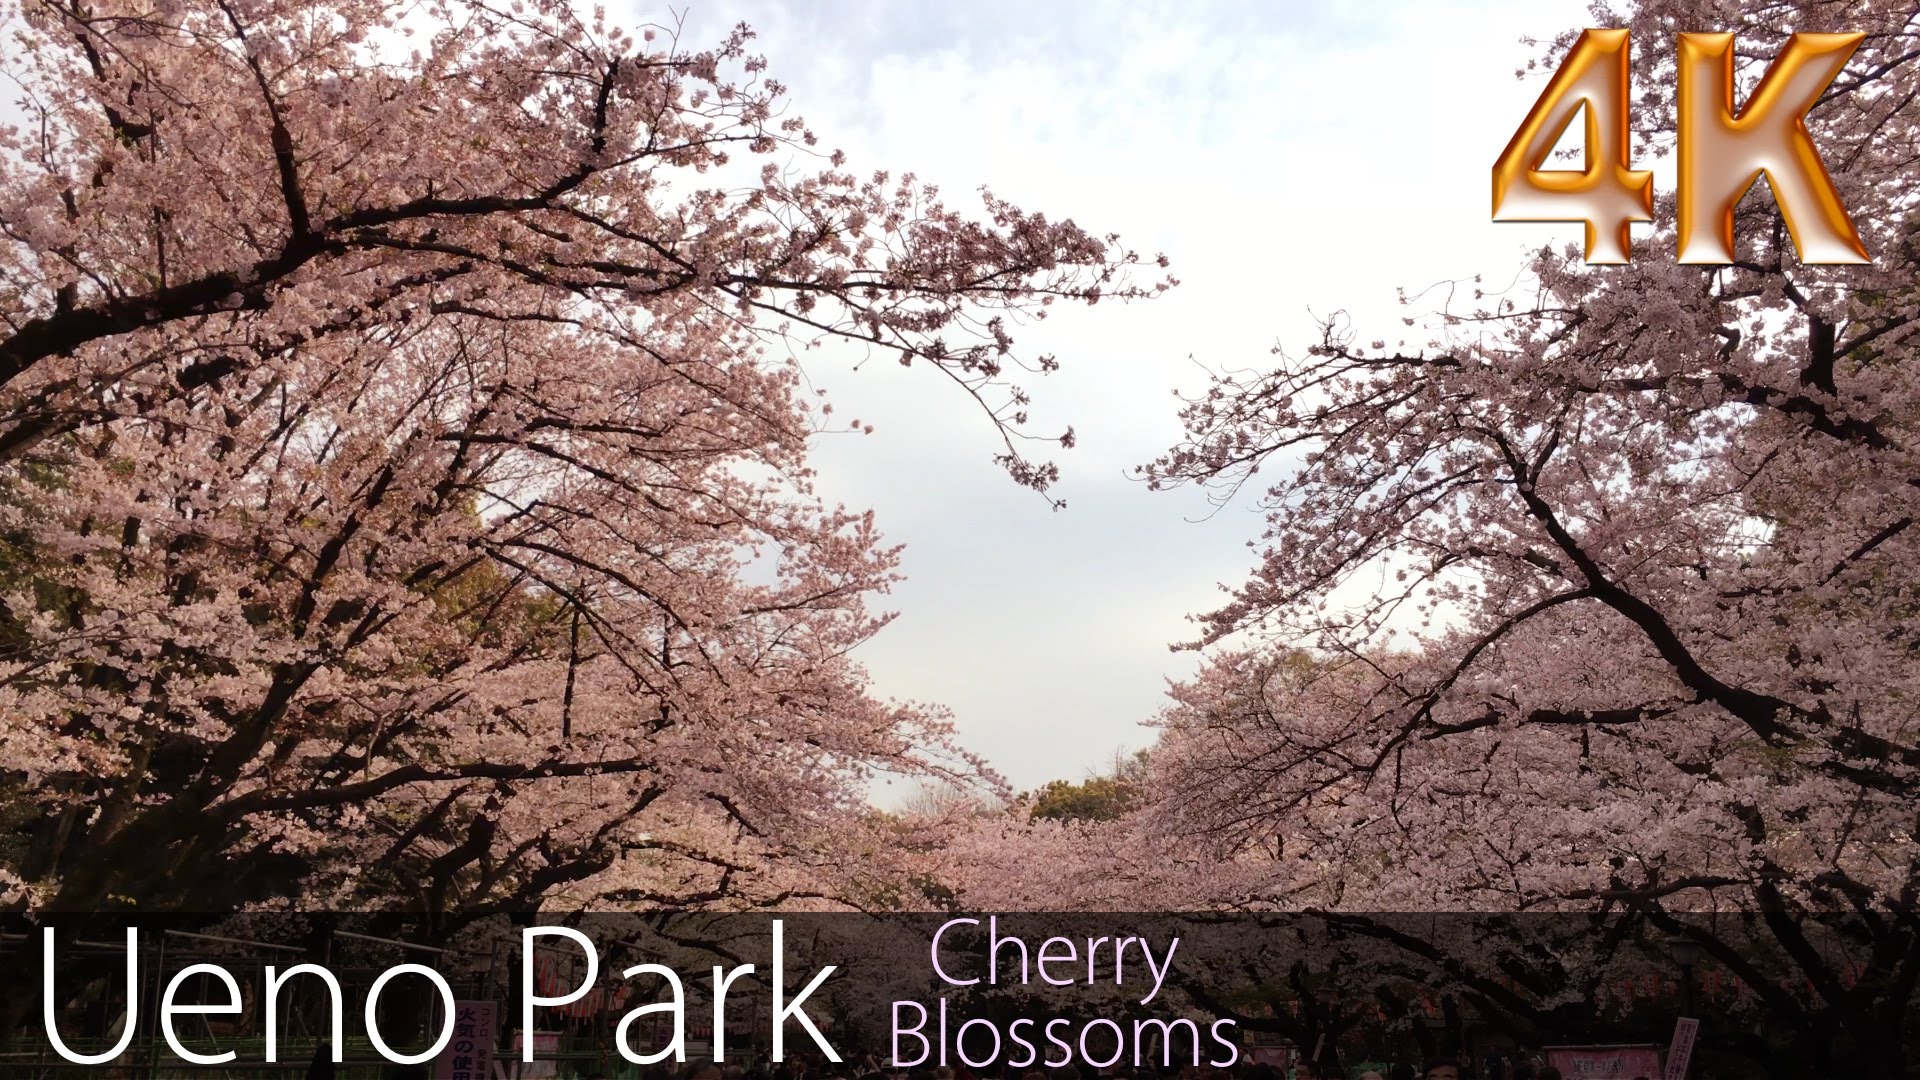 4K] Cherry blossom (Sakura) Ueno Park in Tokyo Japan 2016. - YouTube